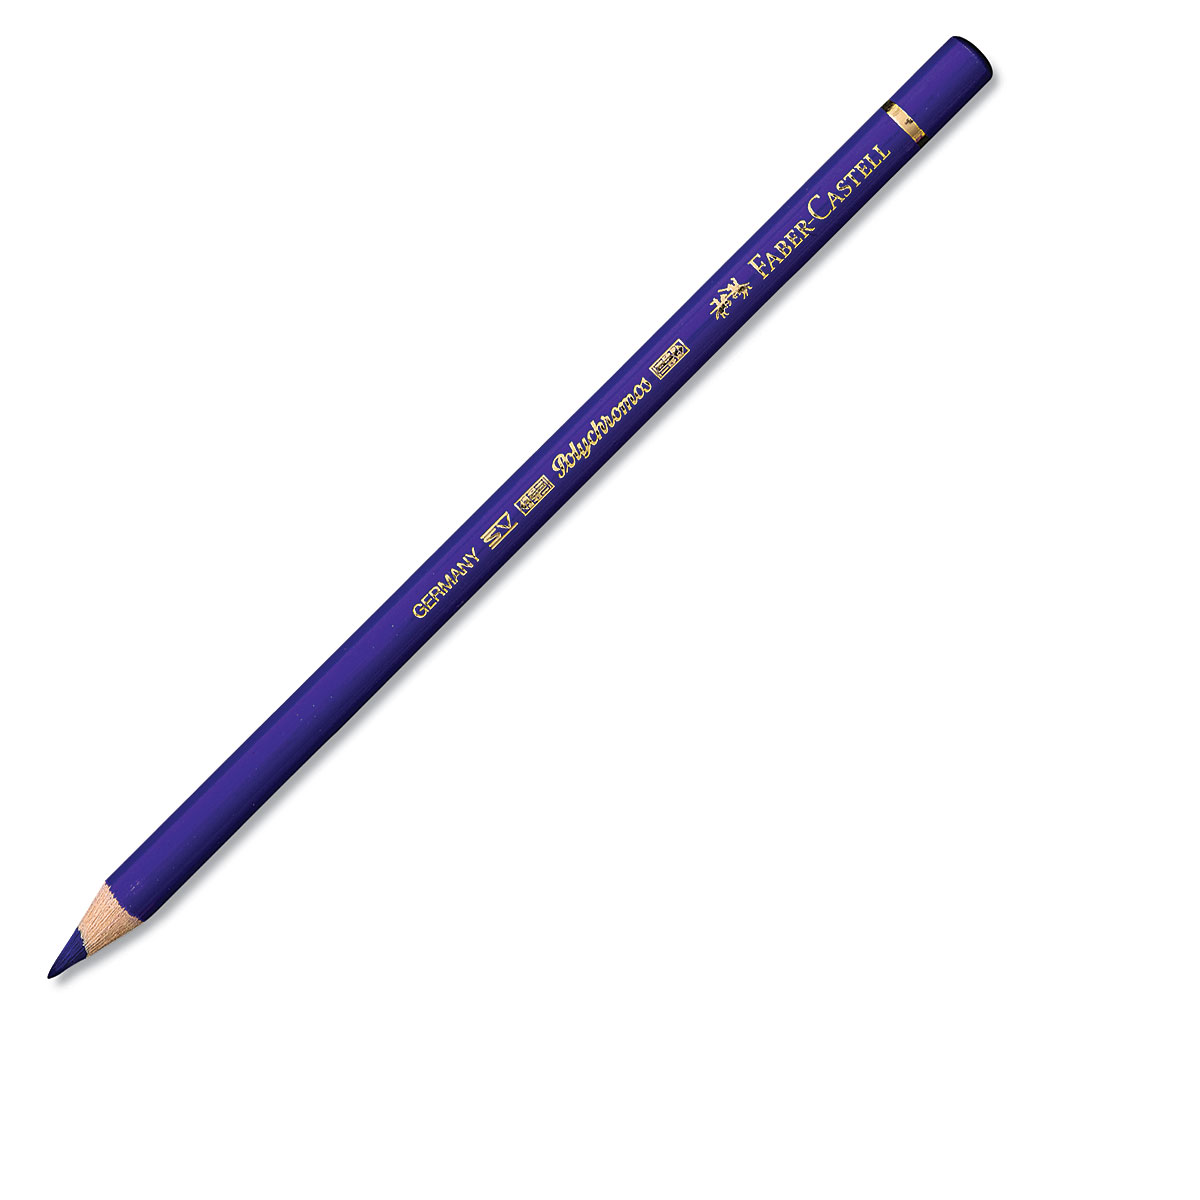 Faber-Castell Polychromos Colour Pencils- set of 12 — Two Hands